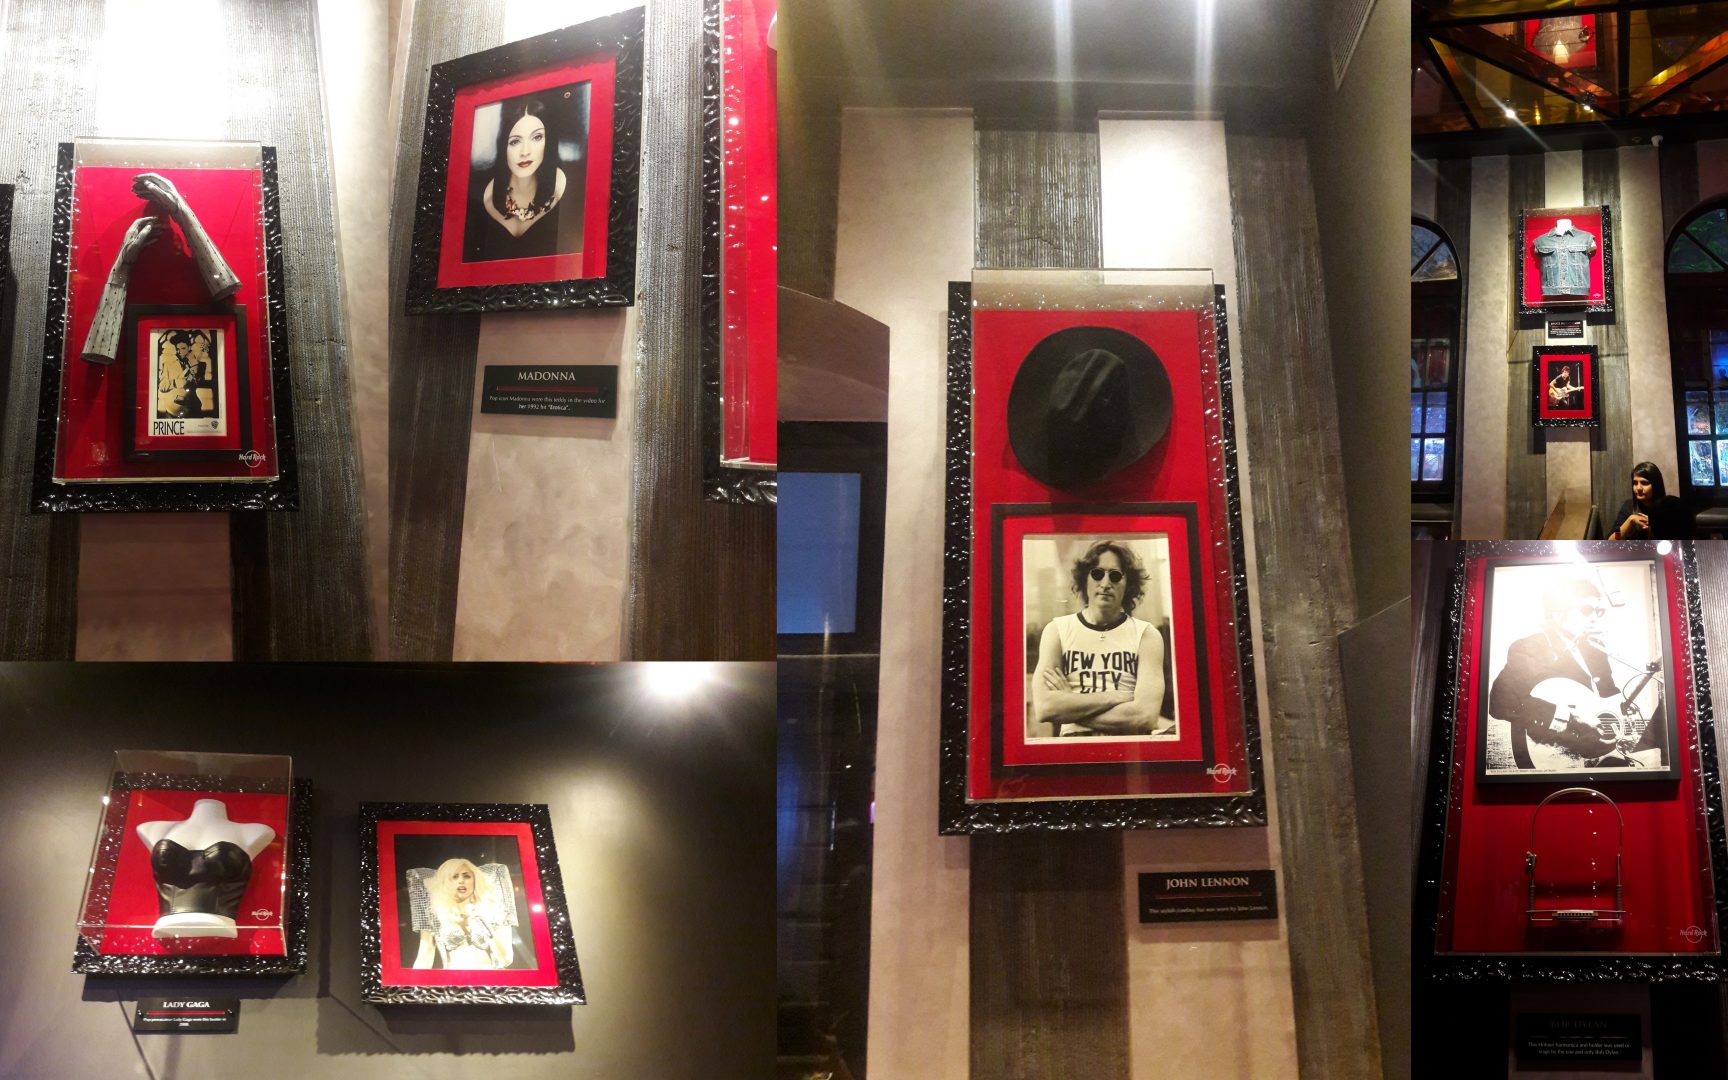 Hard rock cafe Kolkata memorabilia on walls